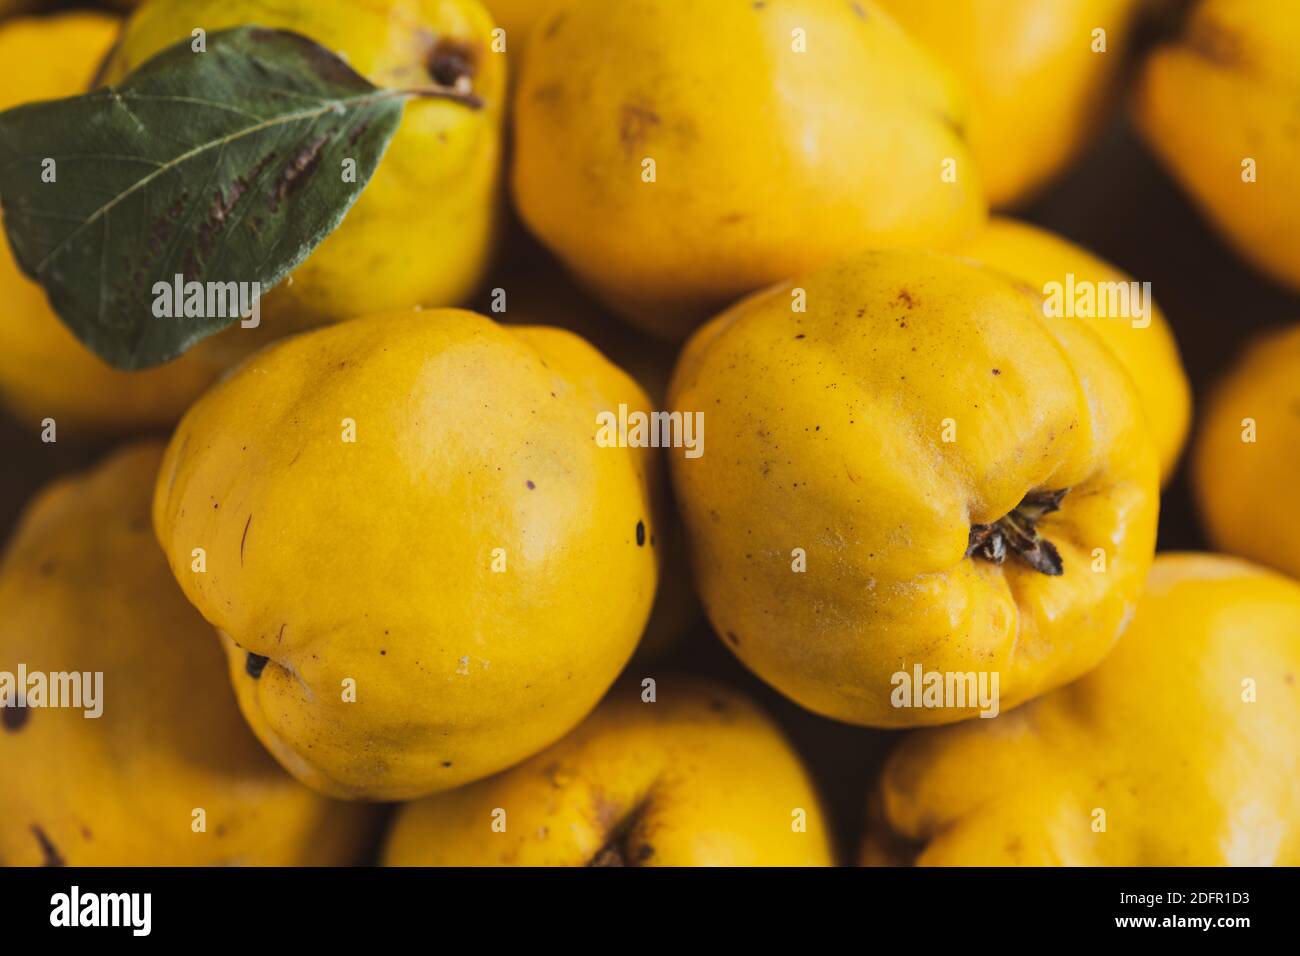 Quinces, heap of quinces on a wooden surface, yellow quinces, pile of quinces, Quitten, Quitten auf einem holz tisch, photograph of quinces, autumn Stock Photo